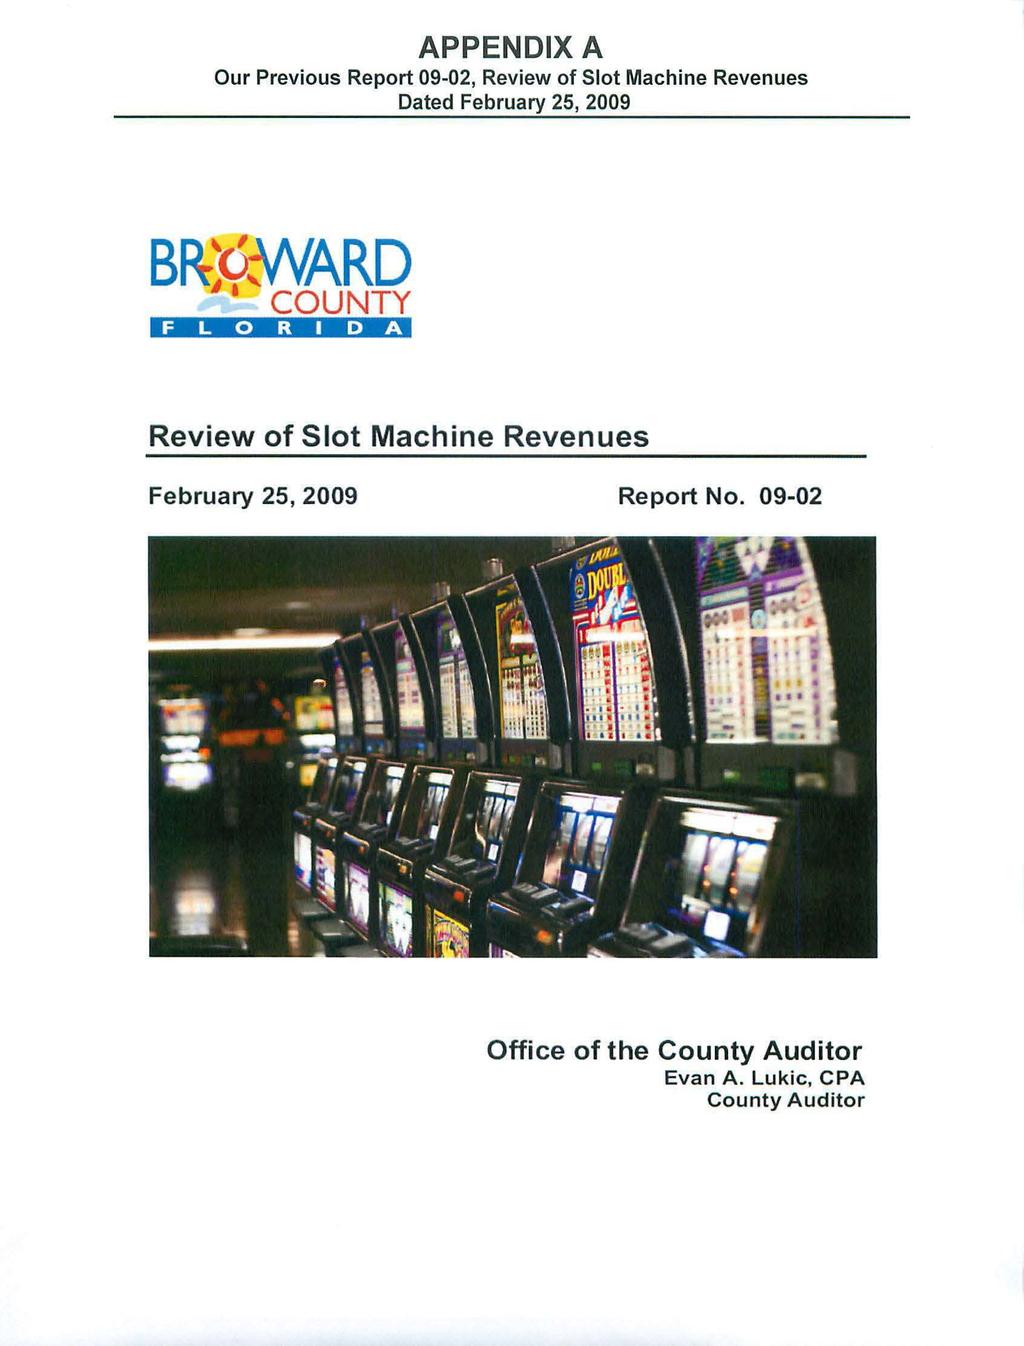 APPENDIX A Our Previous Report 09-02, Review of Slot Machine Revenues Dated February 25, 2009 BR'OWARD ' COUNTY FL 0 RI DA